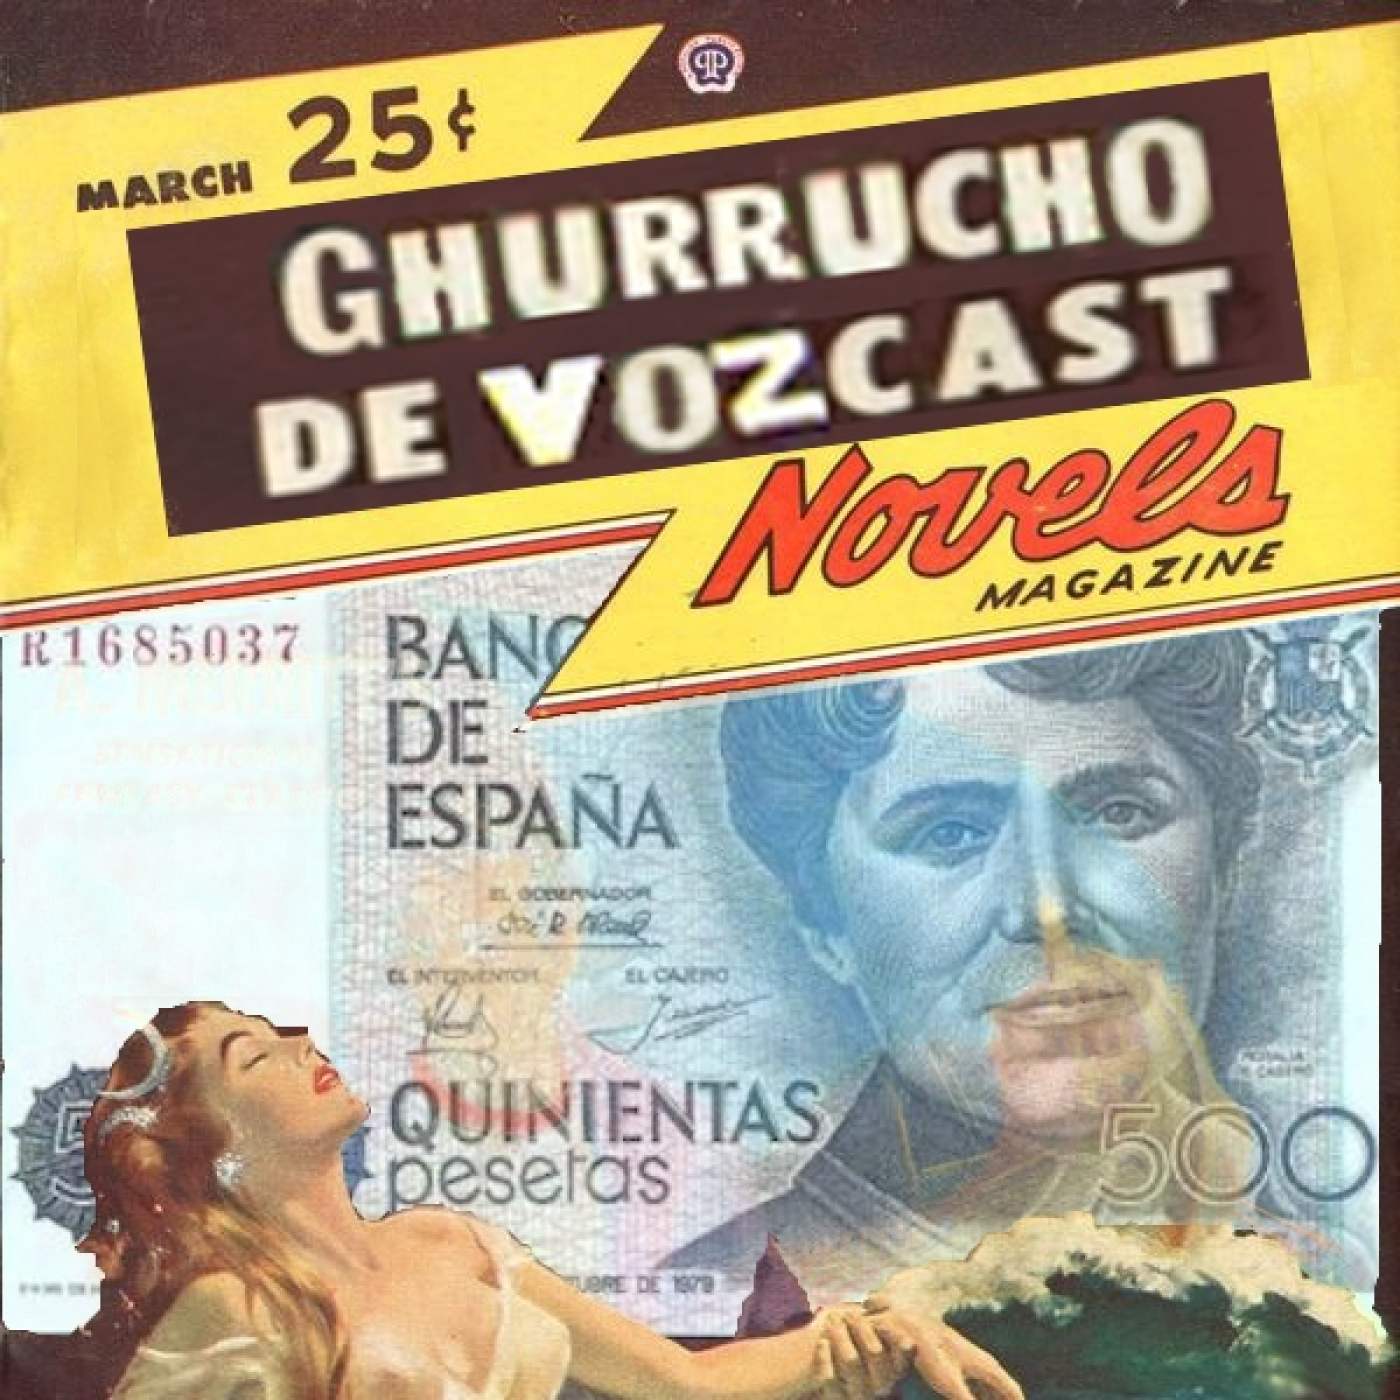 Gurrucho Literatura Galega. Podcast en Galego